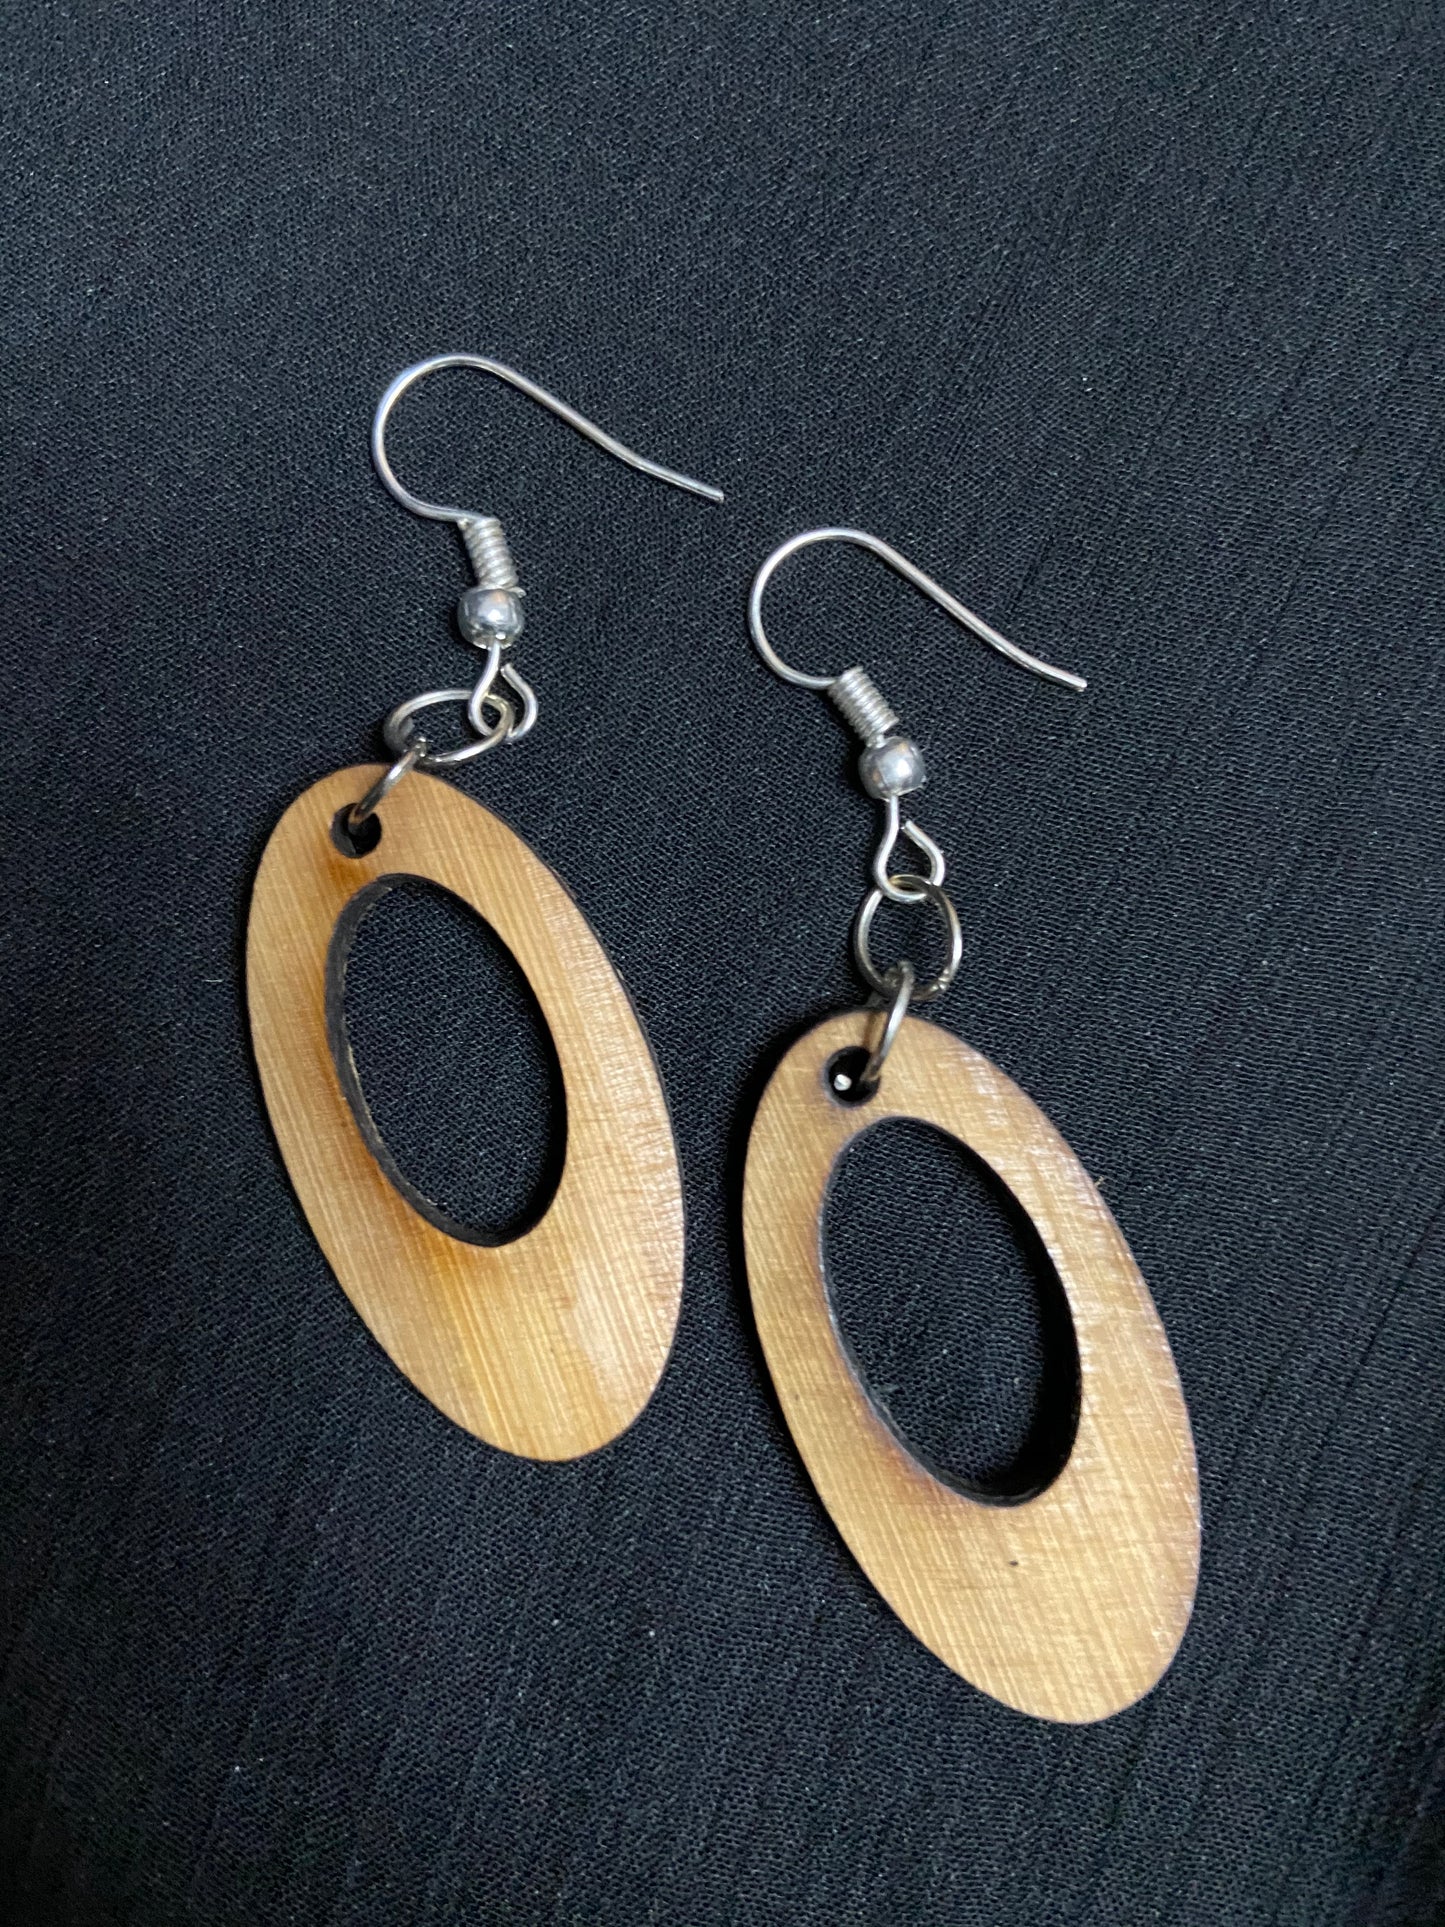 Bamboo dangler earrings in oval shape